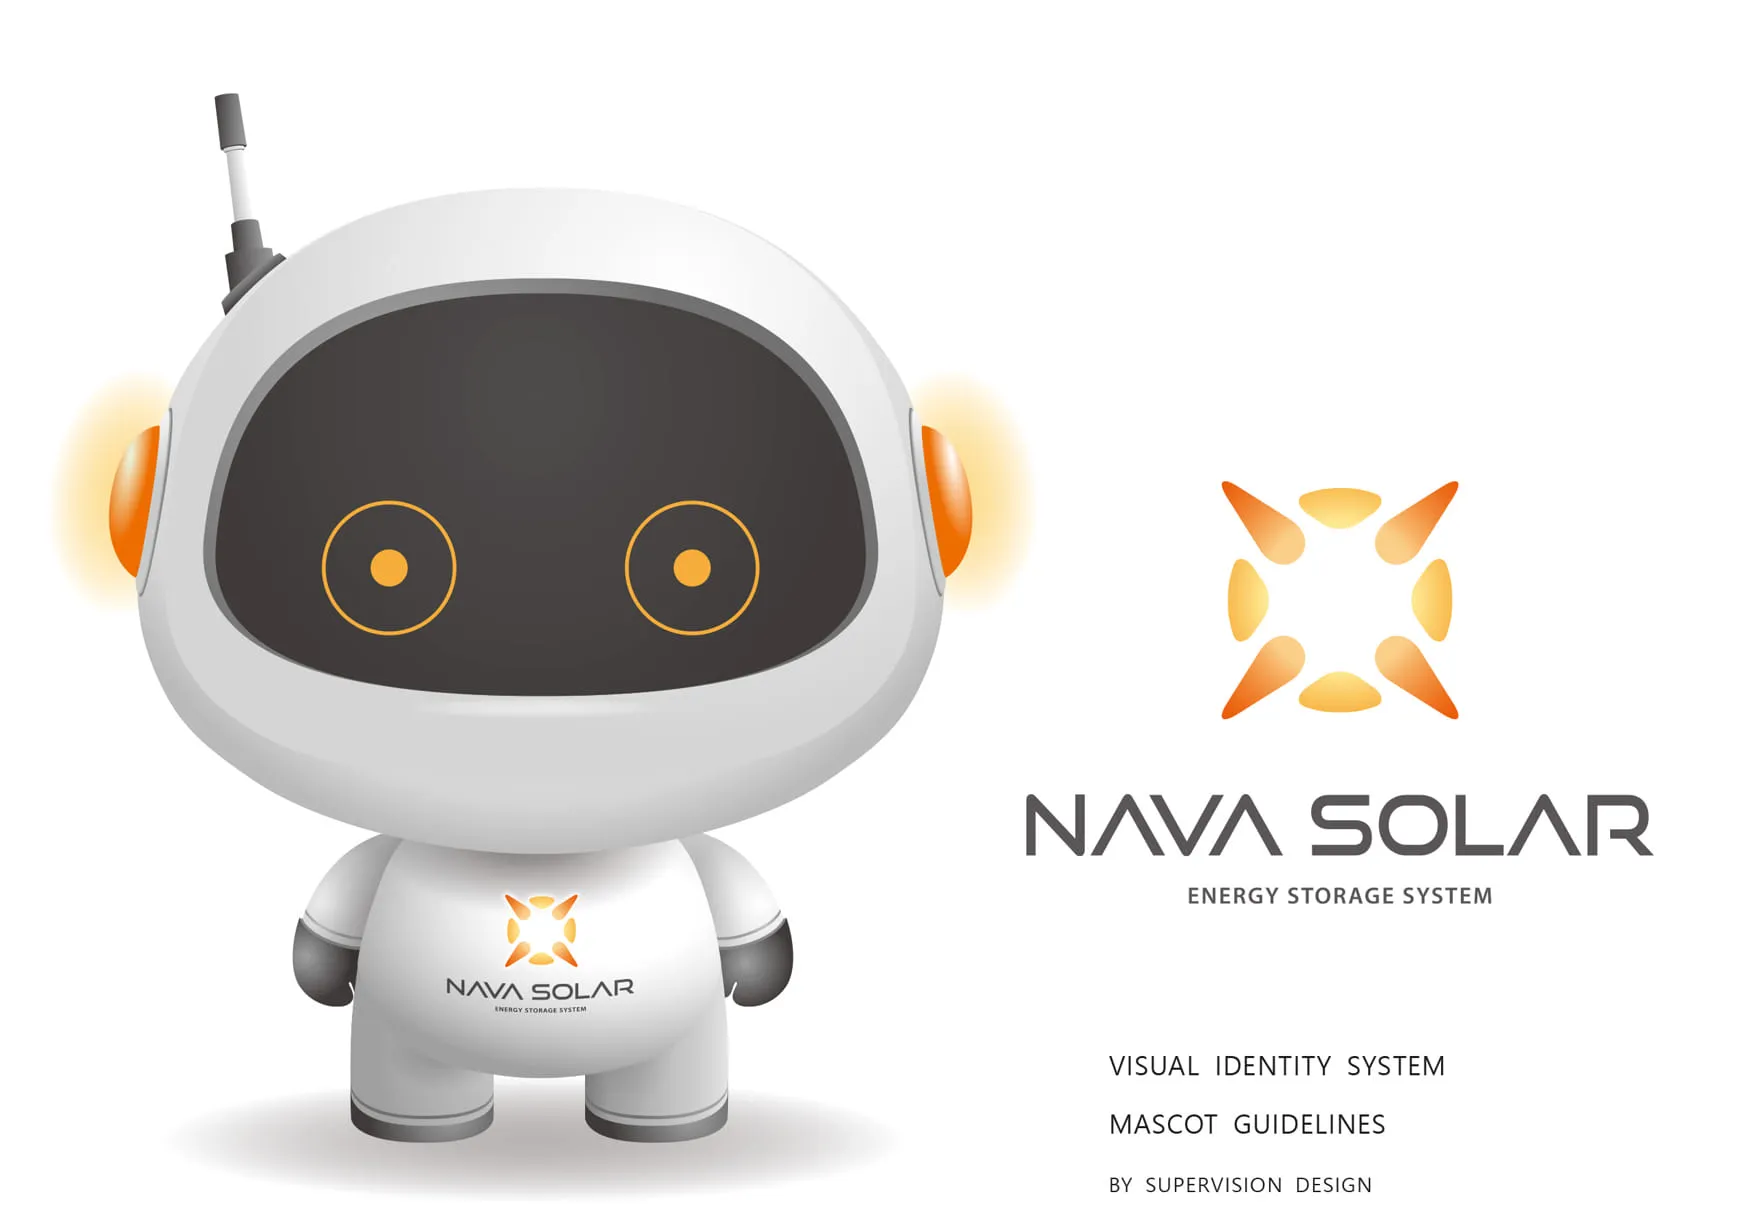 NAVA SOLAR 太陽能光電存儲品牌吉祥物設計角色企劃 Mascot design